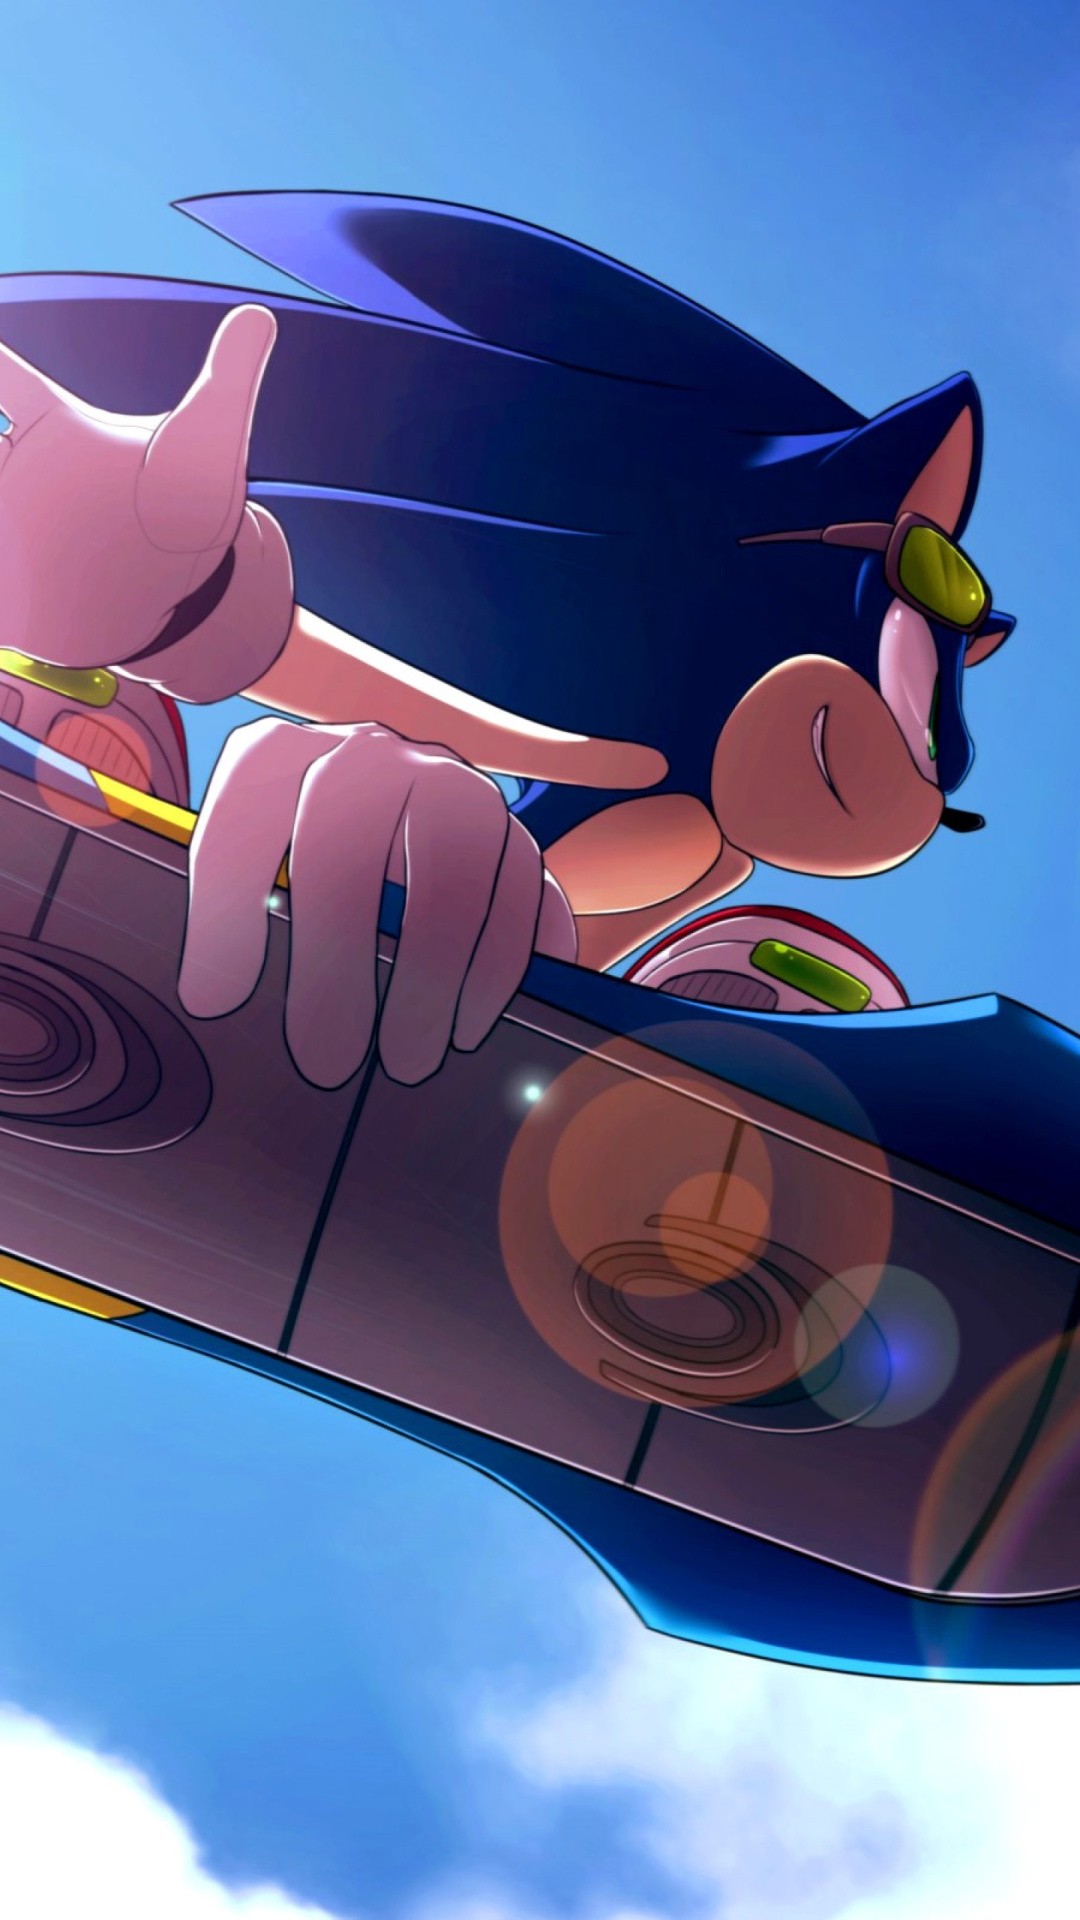 Sonic The Hedgehog screensaver wallpaper